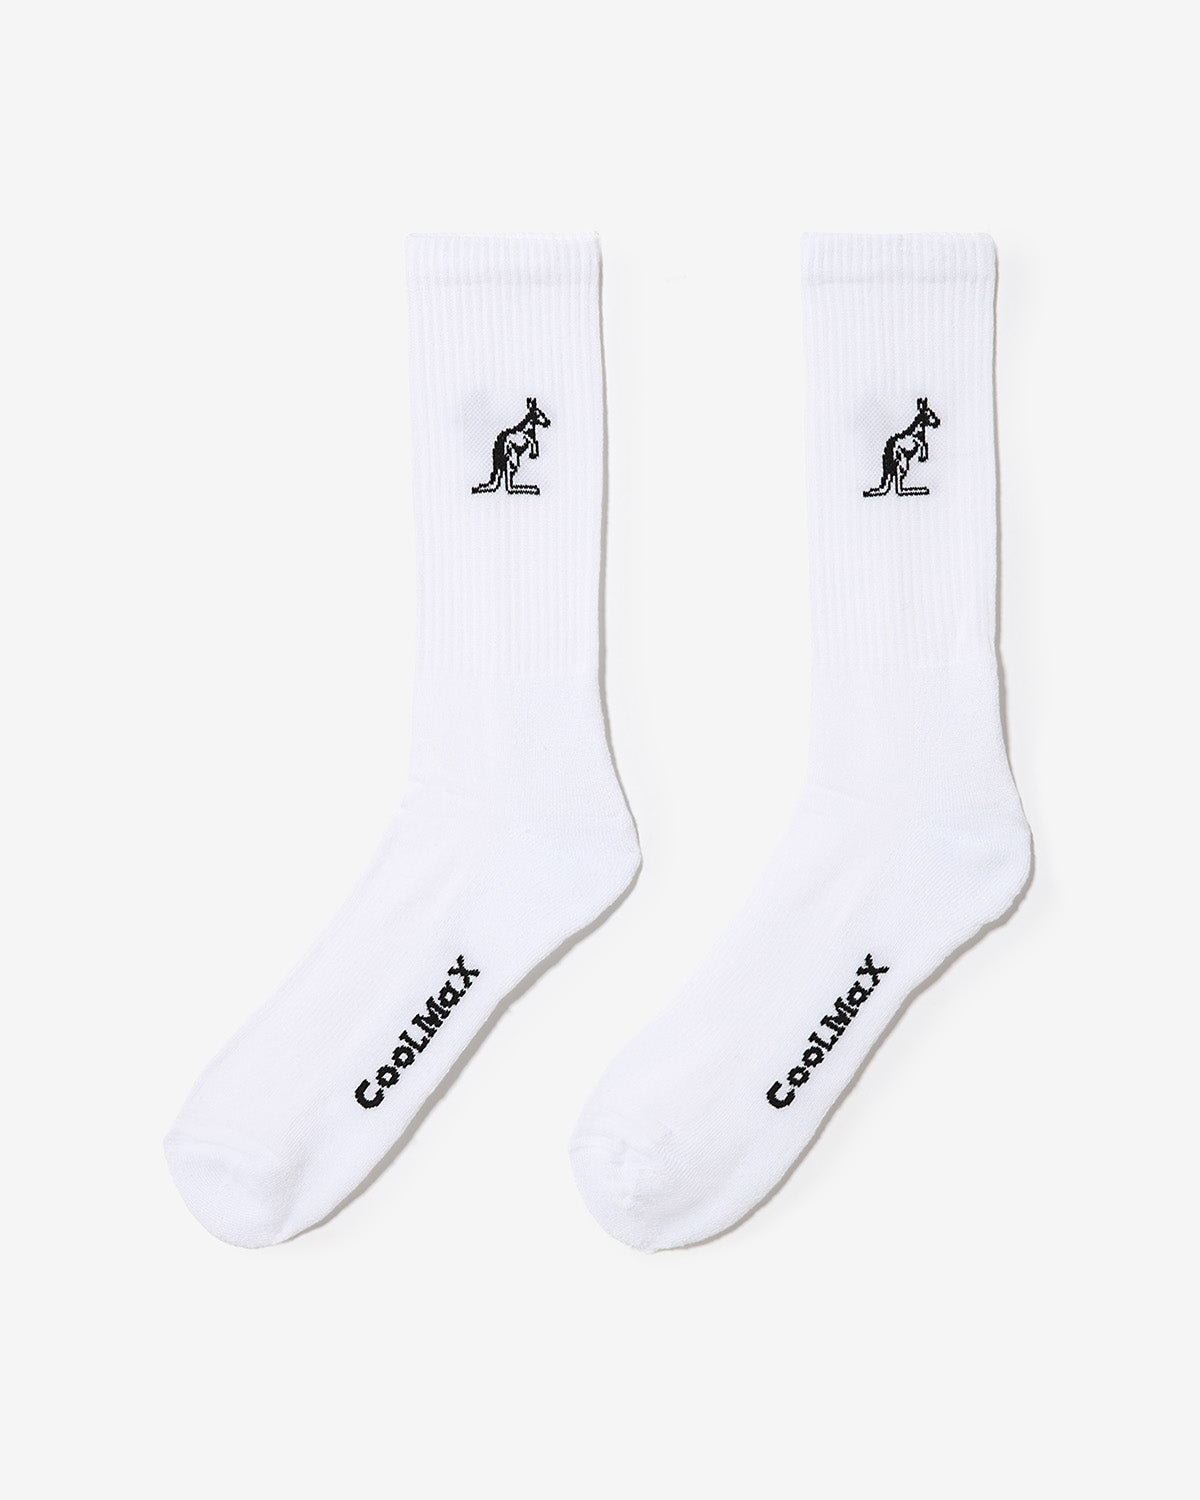 Coolmax Socks: Australian Tennis